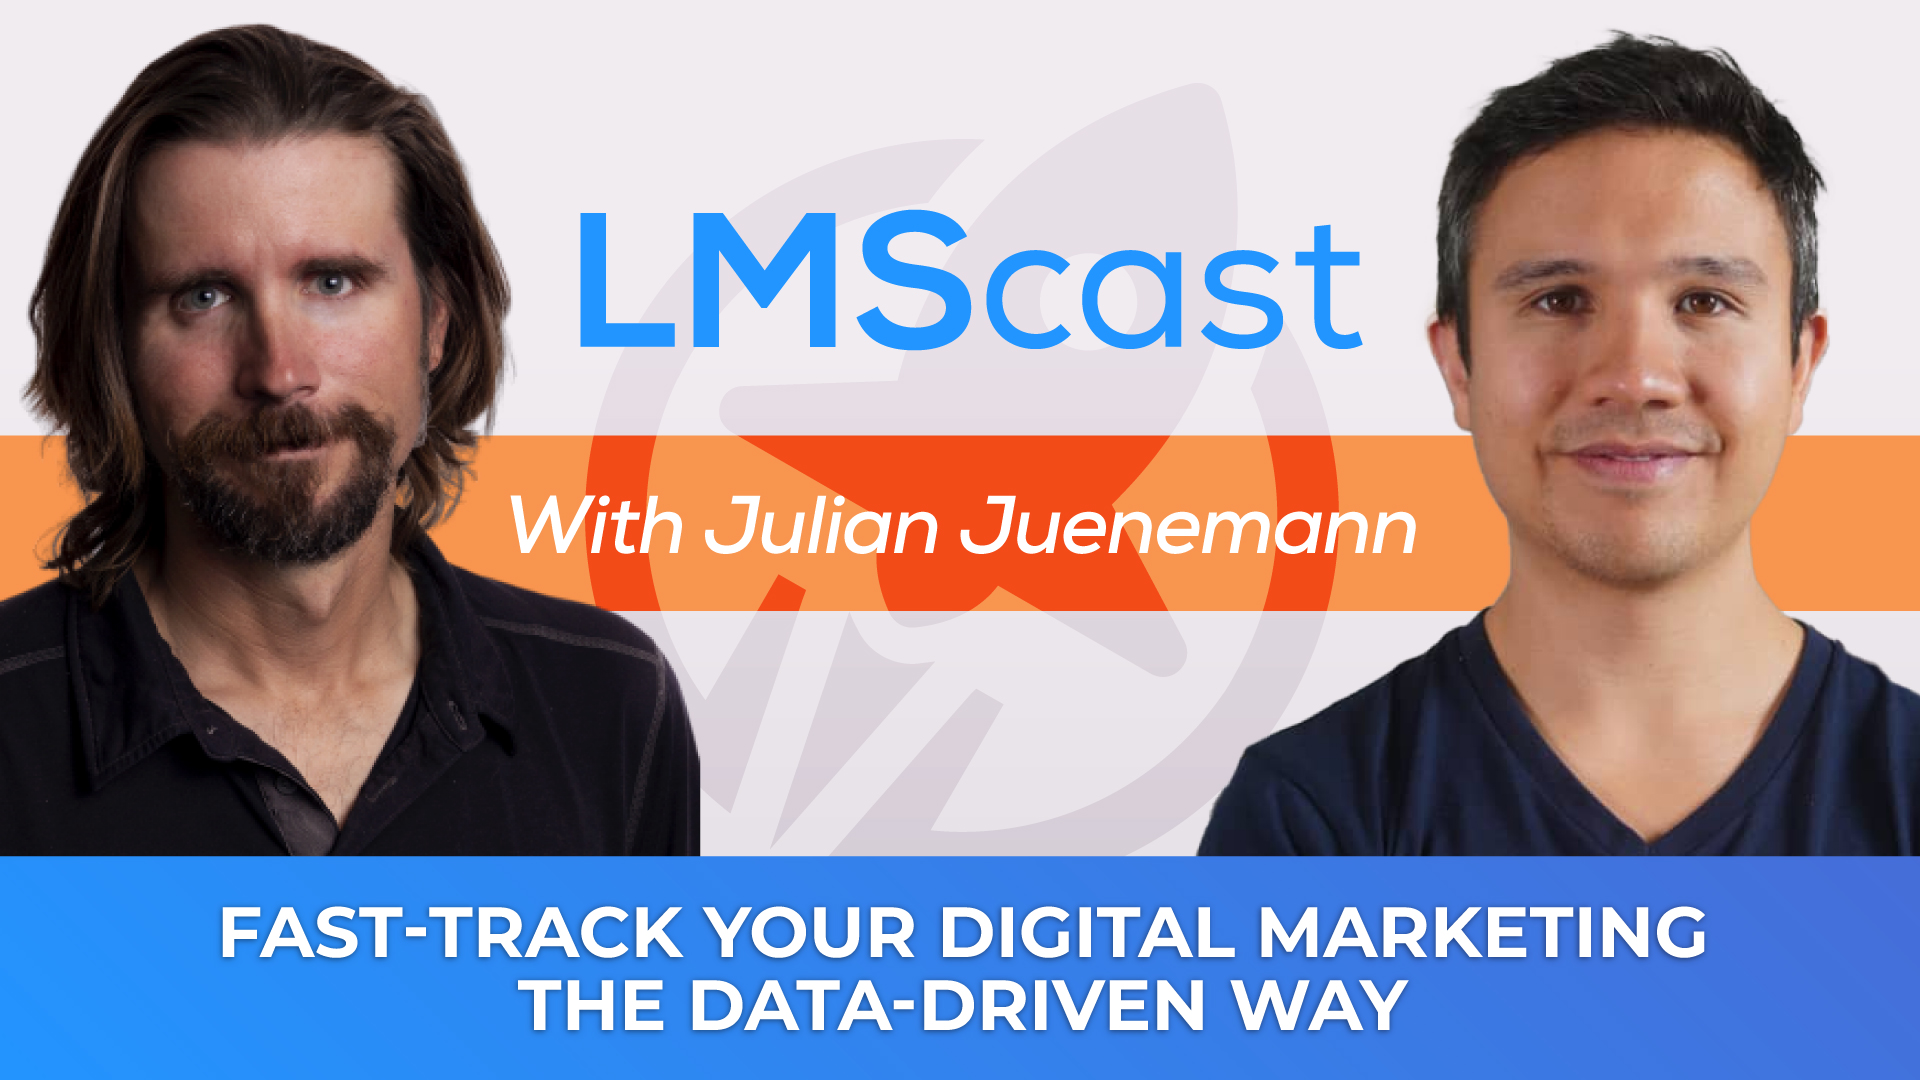 Fast-track Your Digital Marketing the Data-driven Way with Google Analytics Expert Julian Juenemann